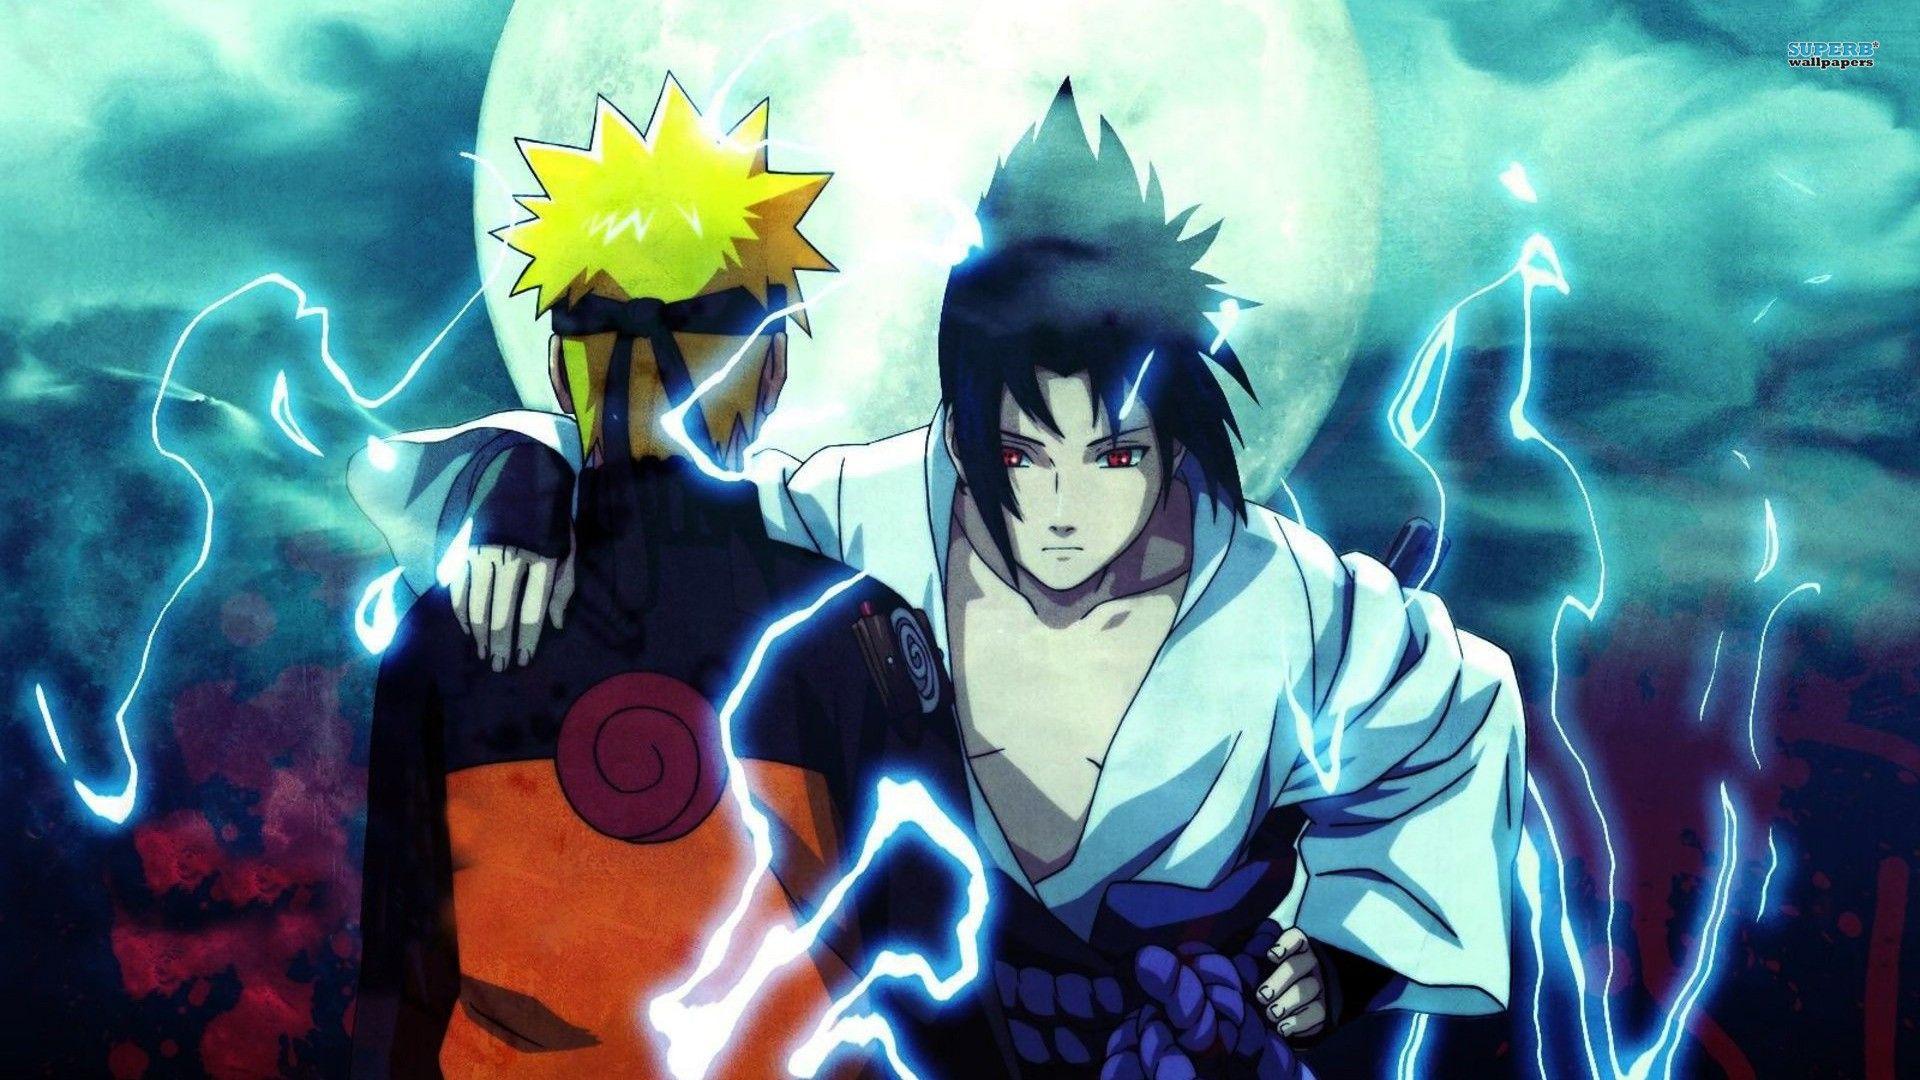 Naruto Sasuke Shippuden Picture HD Wallpaper of Anime. Wallpaper